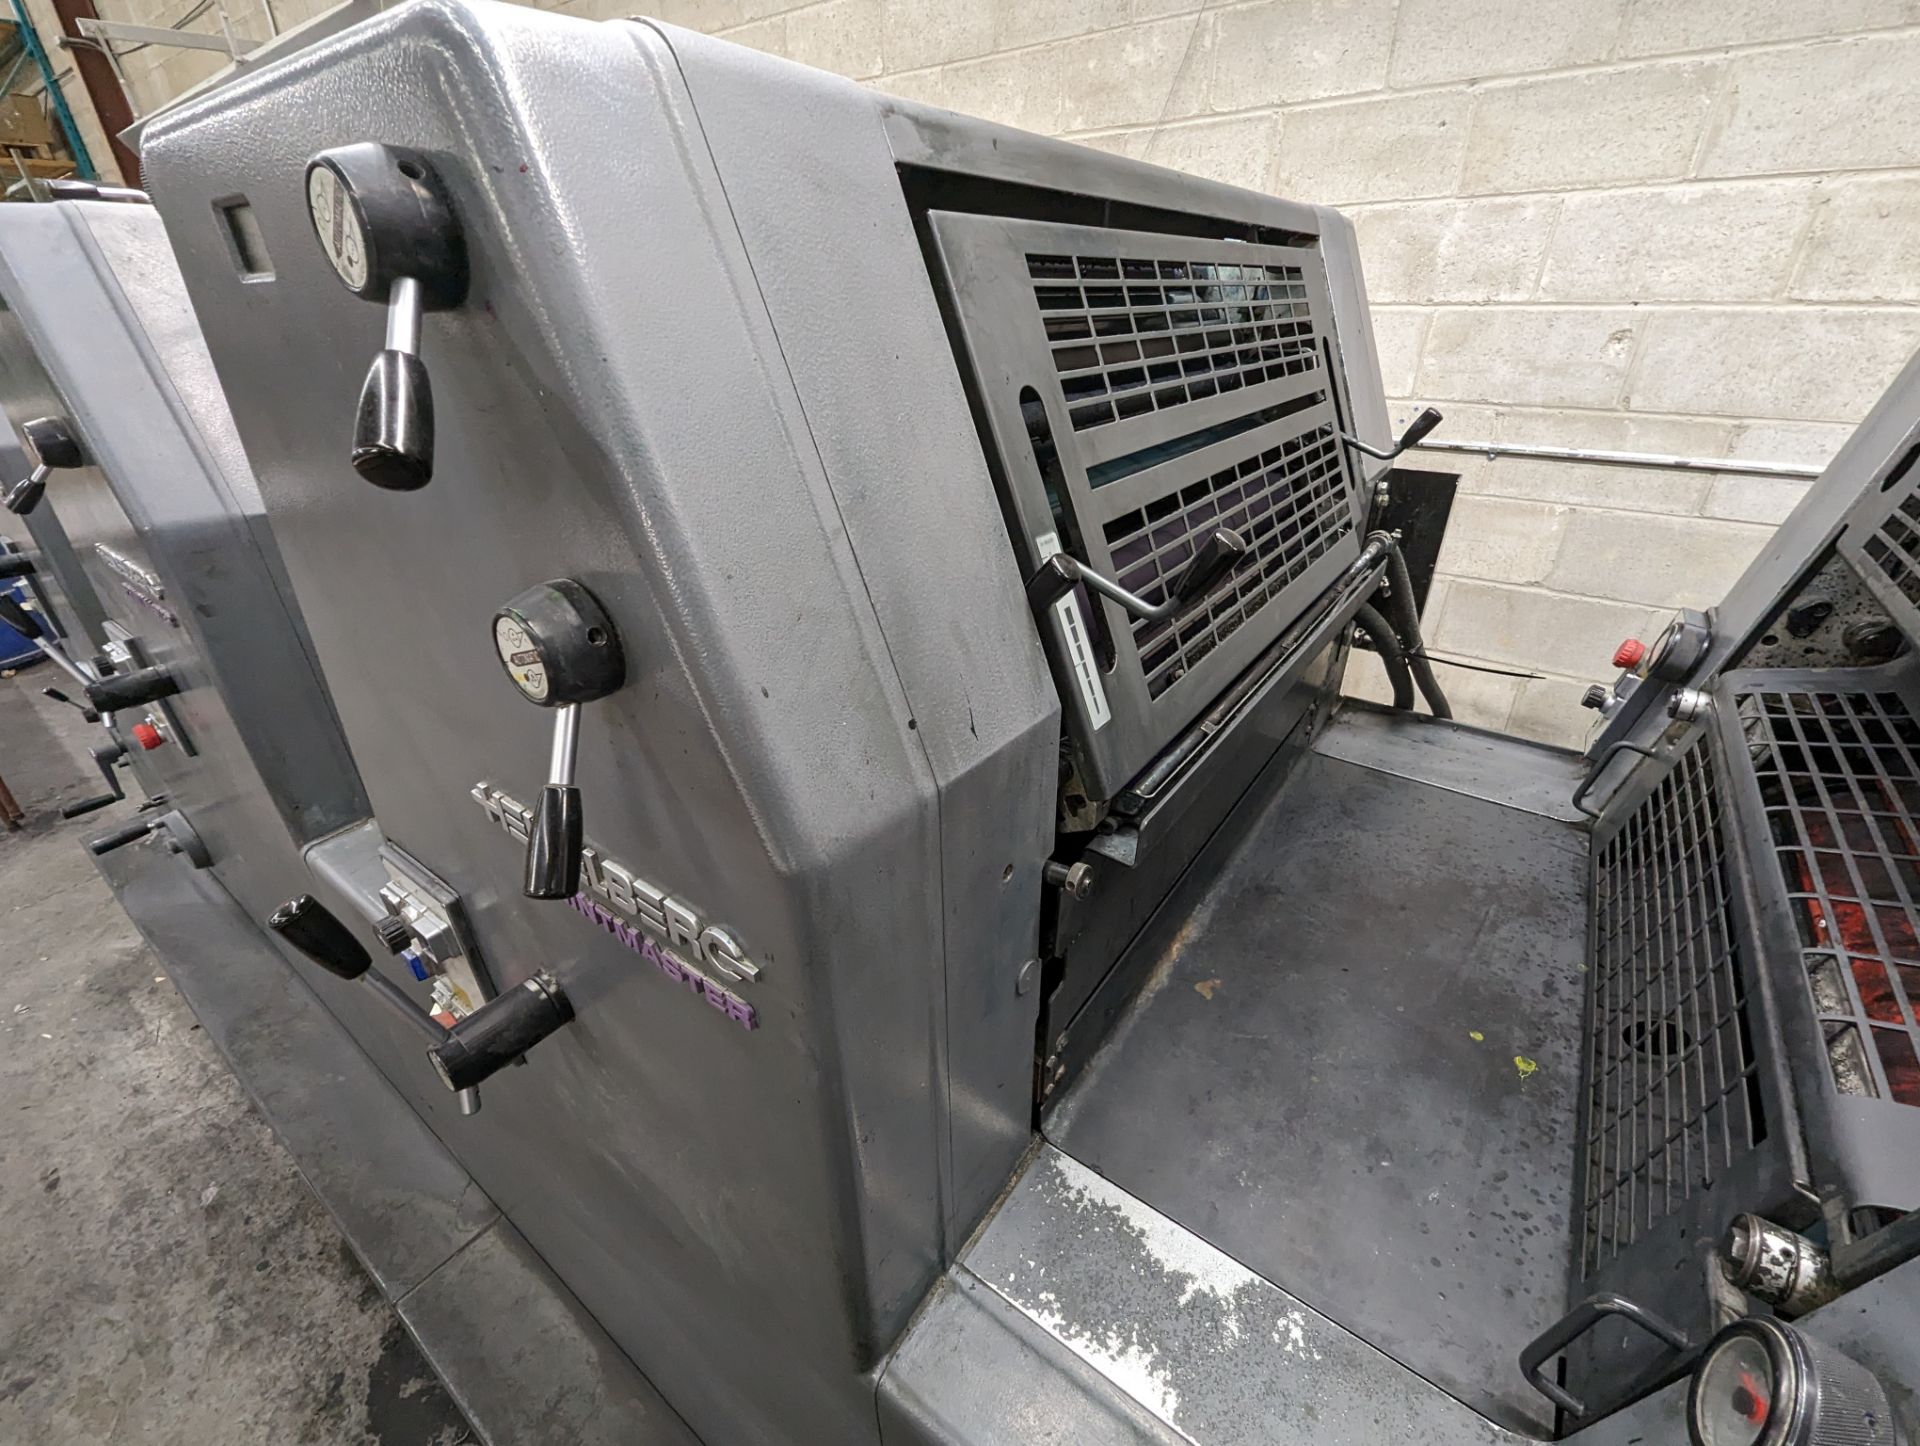 HEIDELBERG PRINTMASTER GTO 52 4-COLOUR SHEET-FED OFFSET PRINTING PRESS, 14” X 20”, TECHNOTRANS - Image 7 of 22